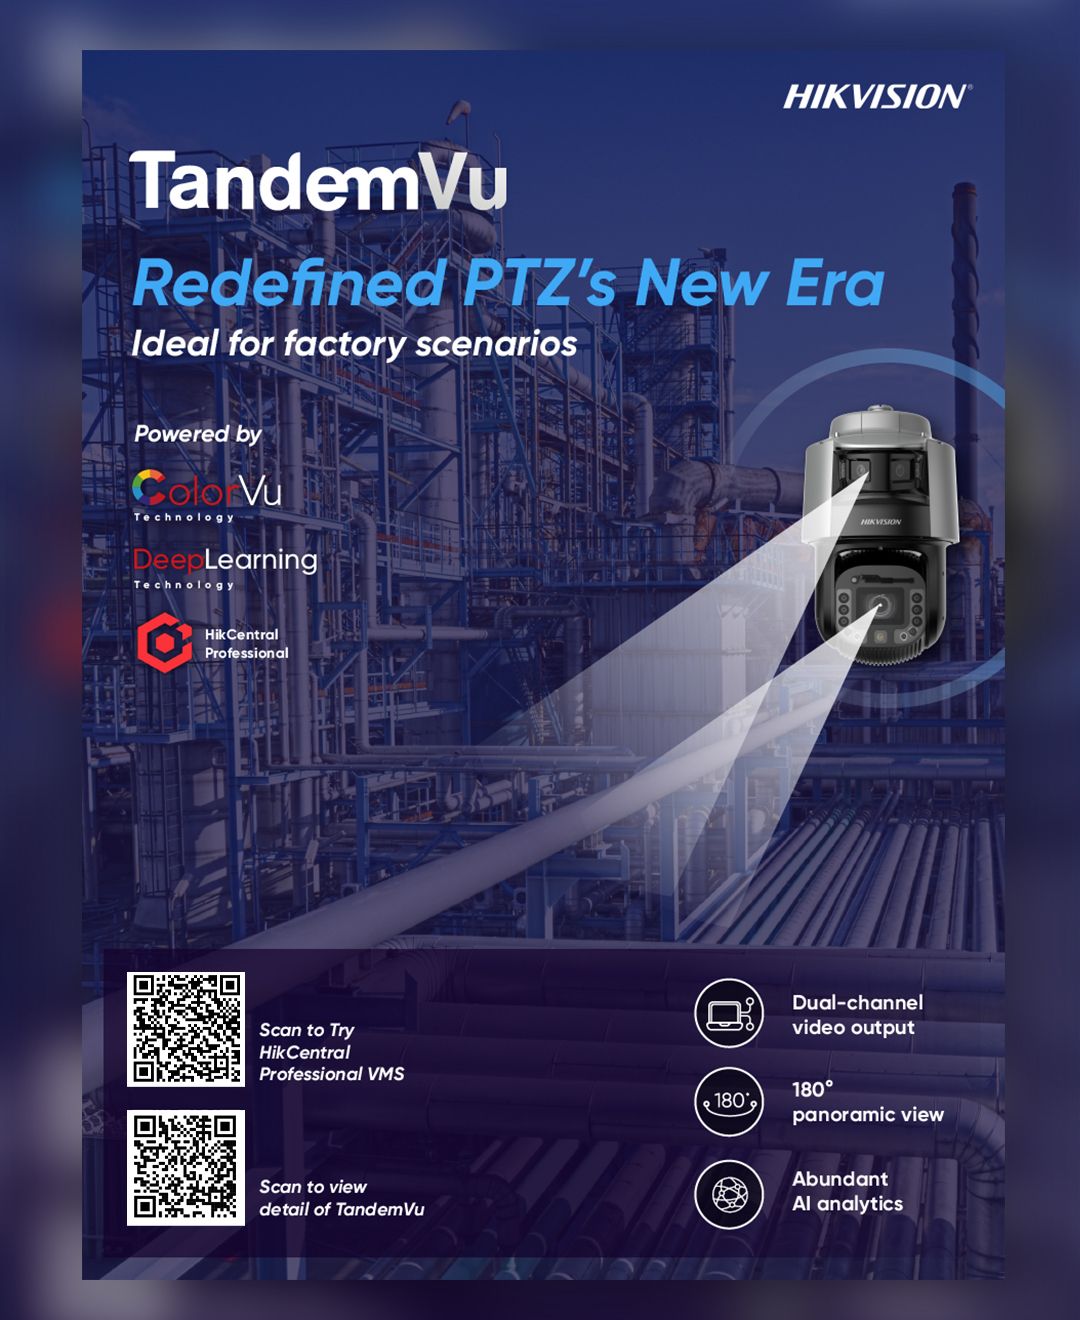 https://www.synnexmetrodata.com/wp-content/uploads/2022/04/Hikvision-TandemVu-Redefined-PTZ’s-New-Era-Ideal-for-Factory-Scenarios-1.jpg